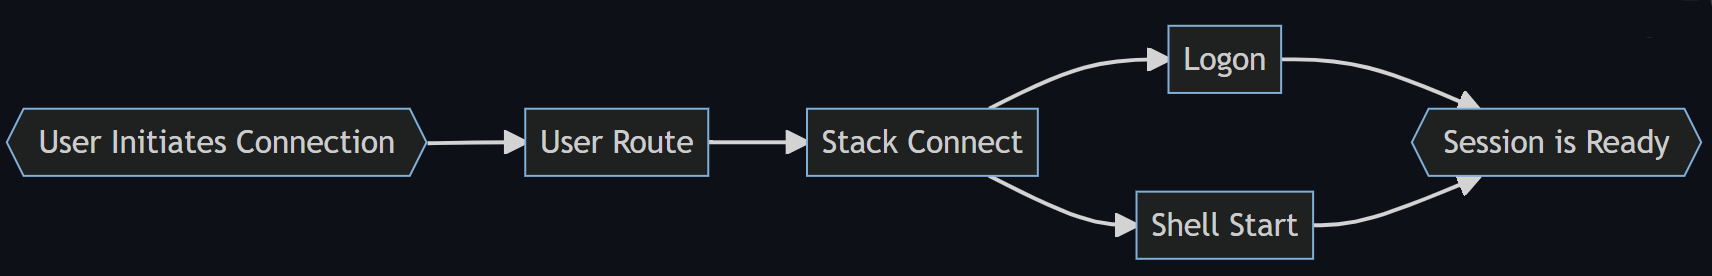 Oturum açma işleminin dört aşamasını gösteren akış çizelgesi: User Route, Stack Connected, Logon ve Shell Start to Shell Ready.